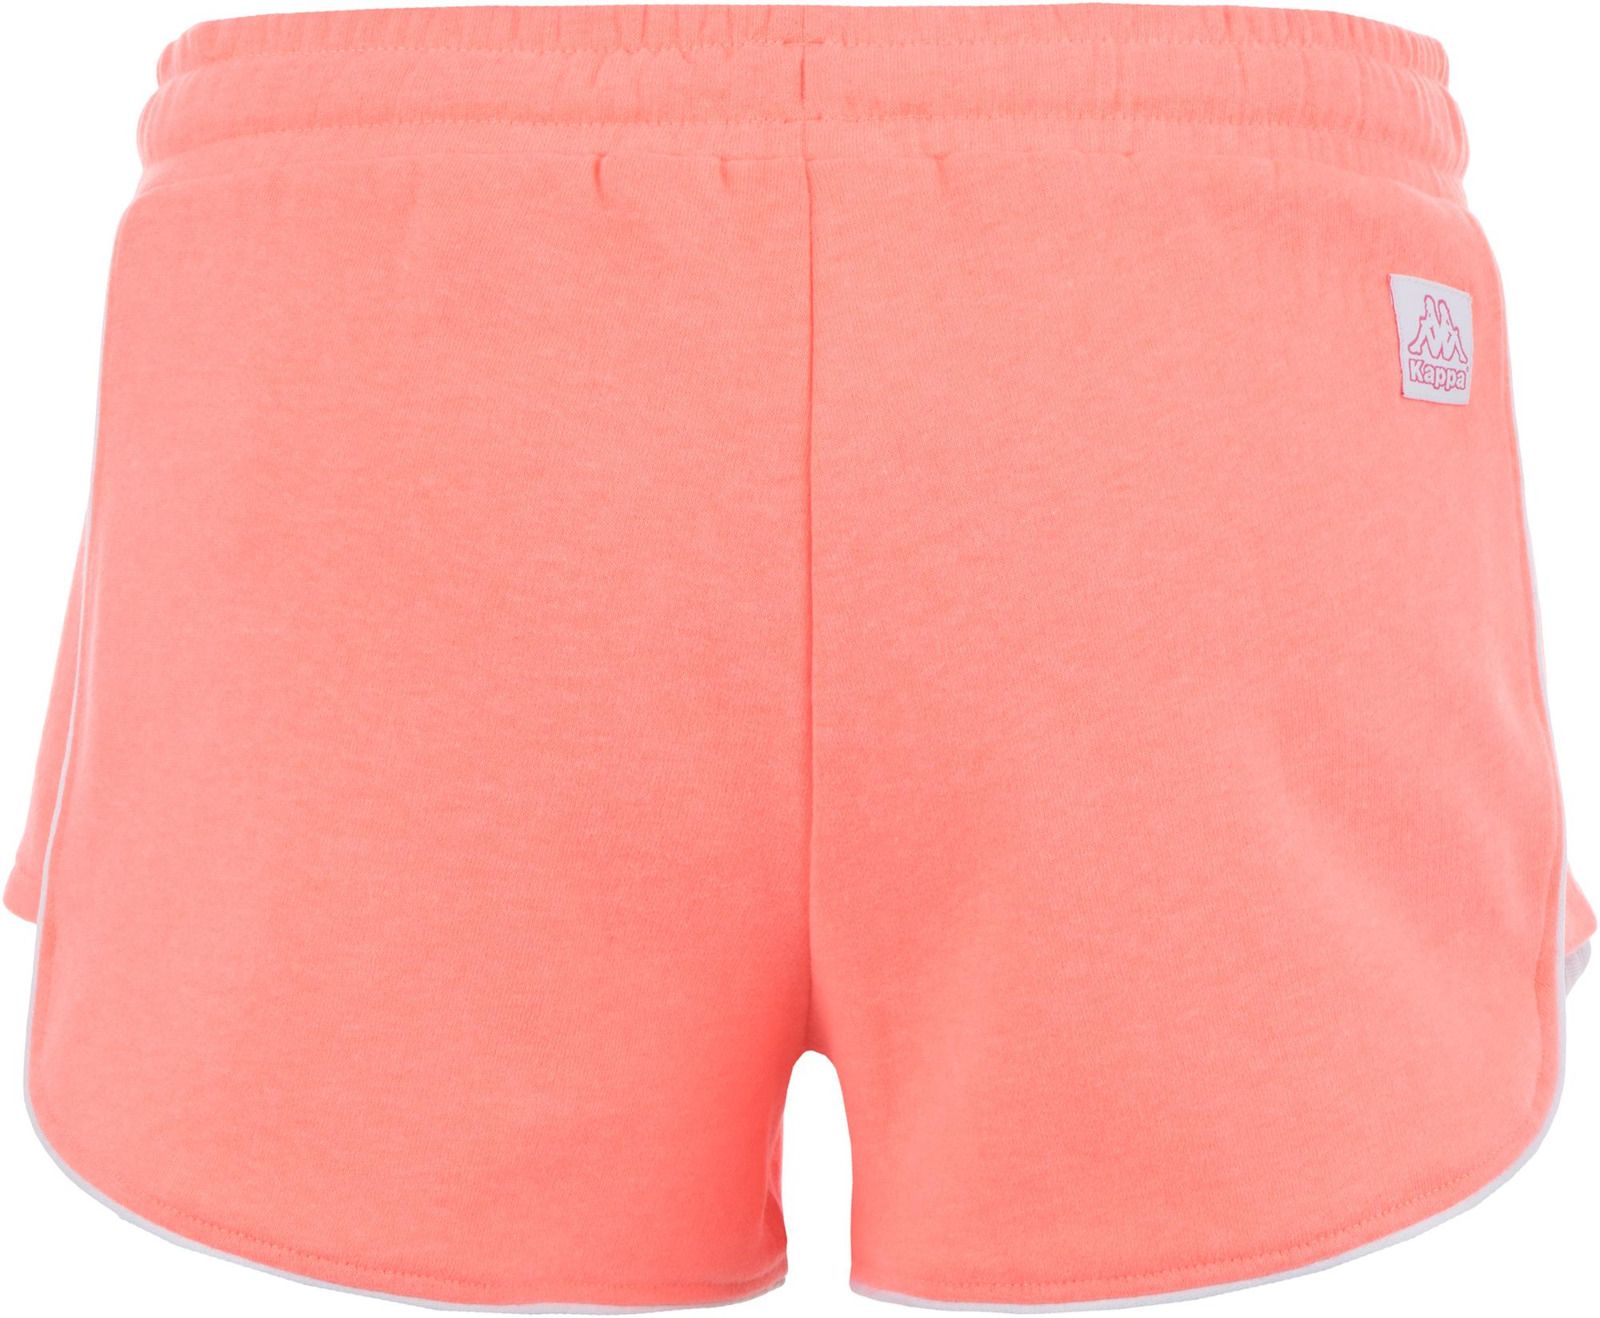   Kappa Women's Shorts, : . 304JSL0-1H.  XS (42)